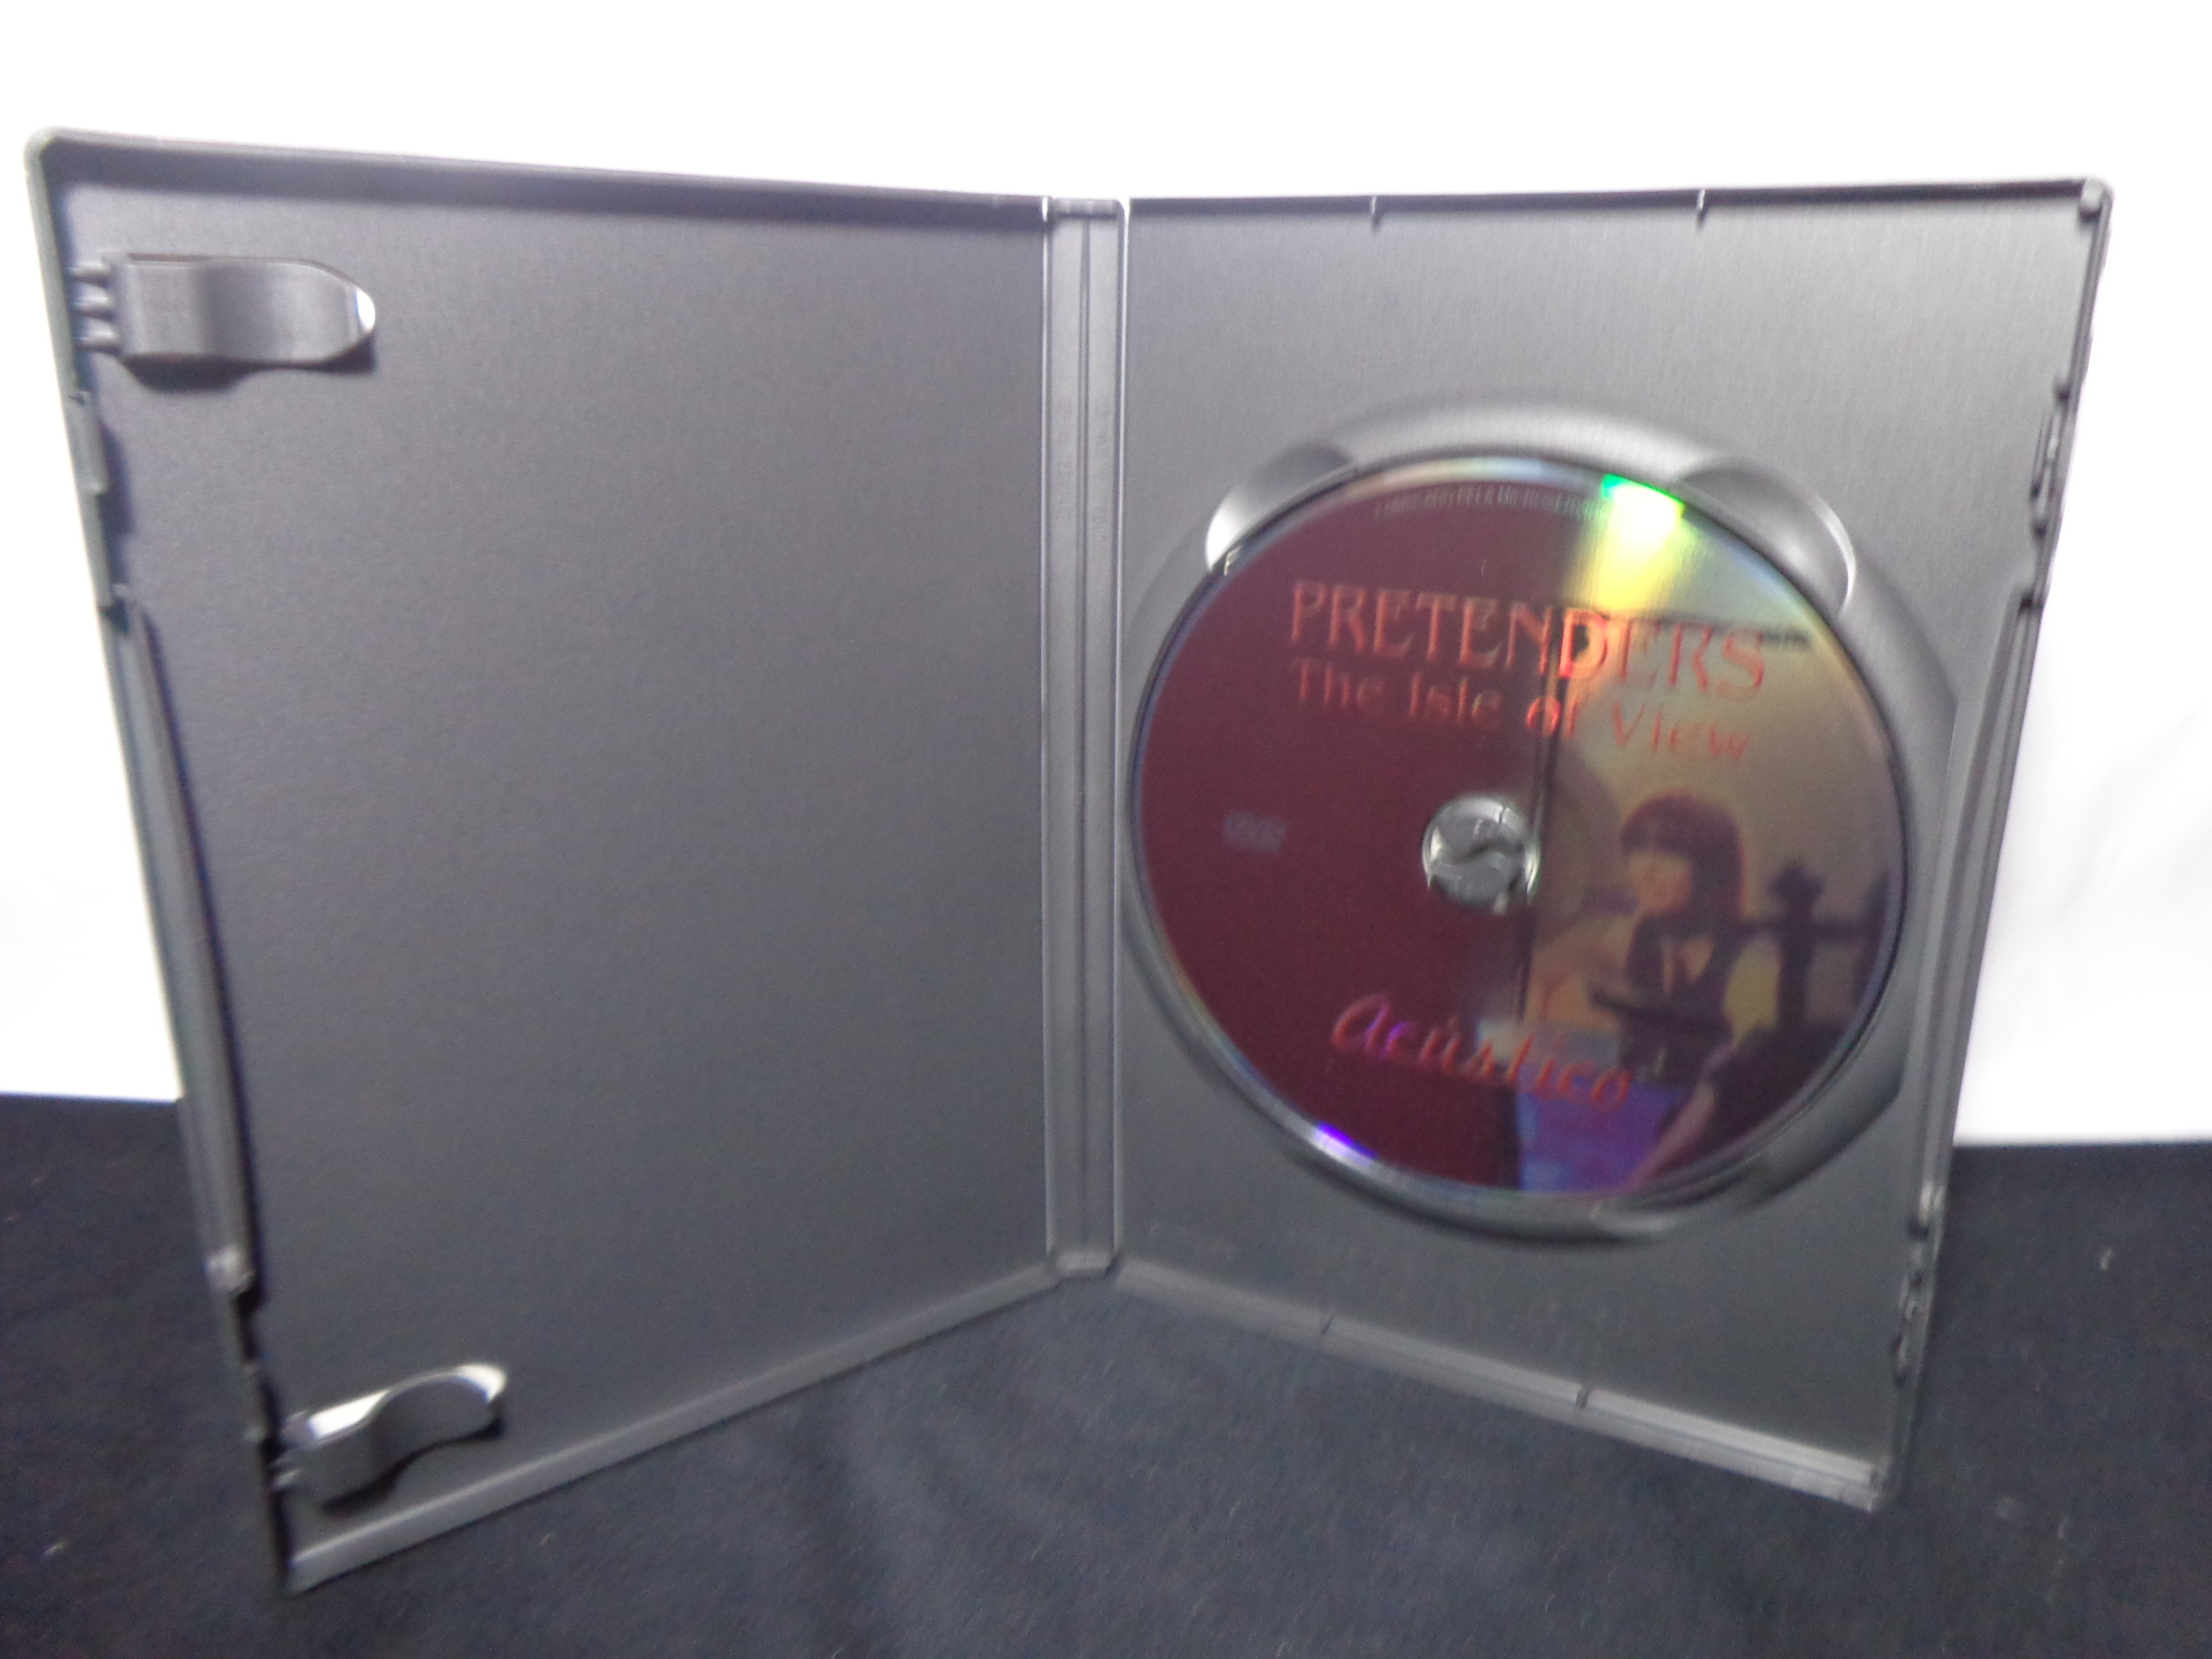 DVD - Pretenders - The Isle of View Acústico